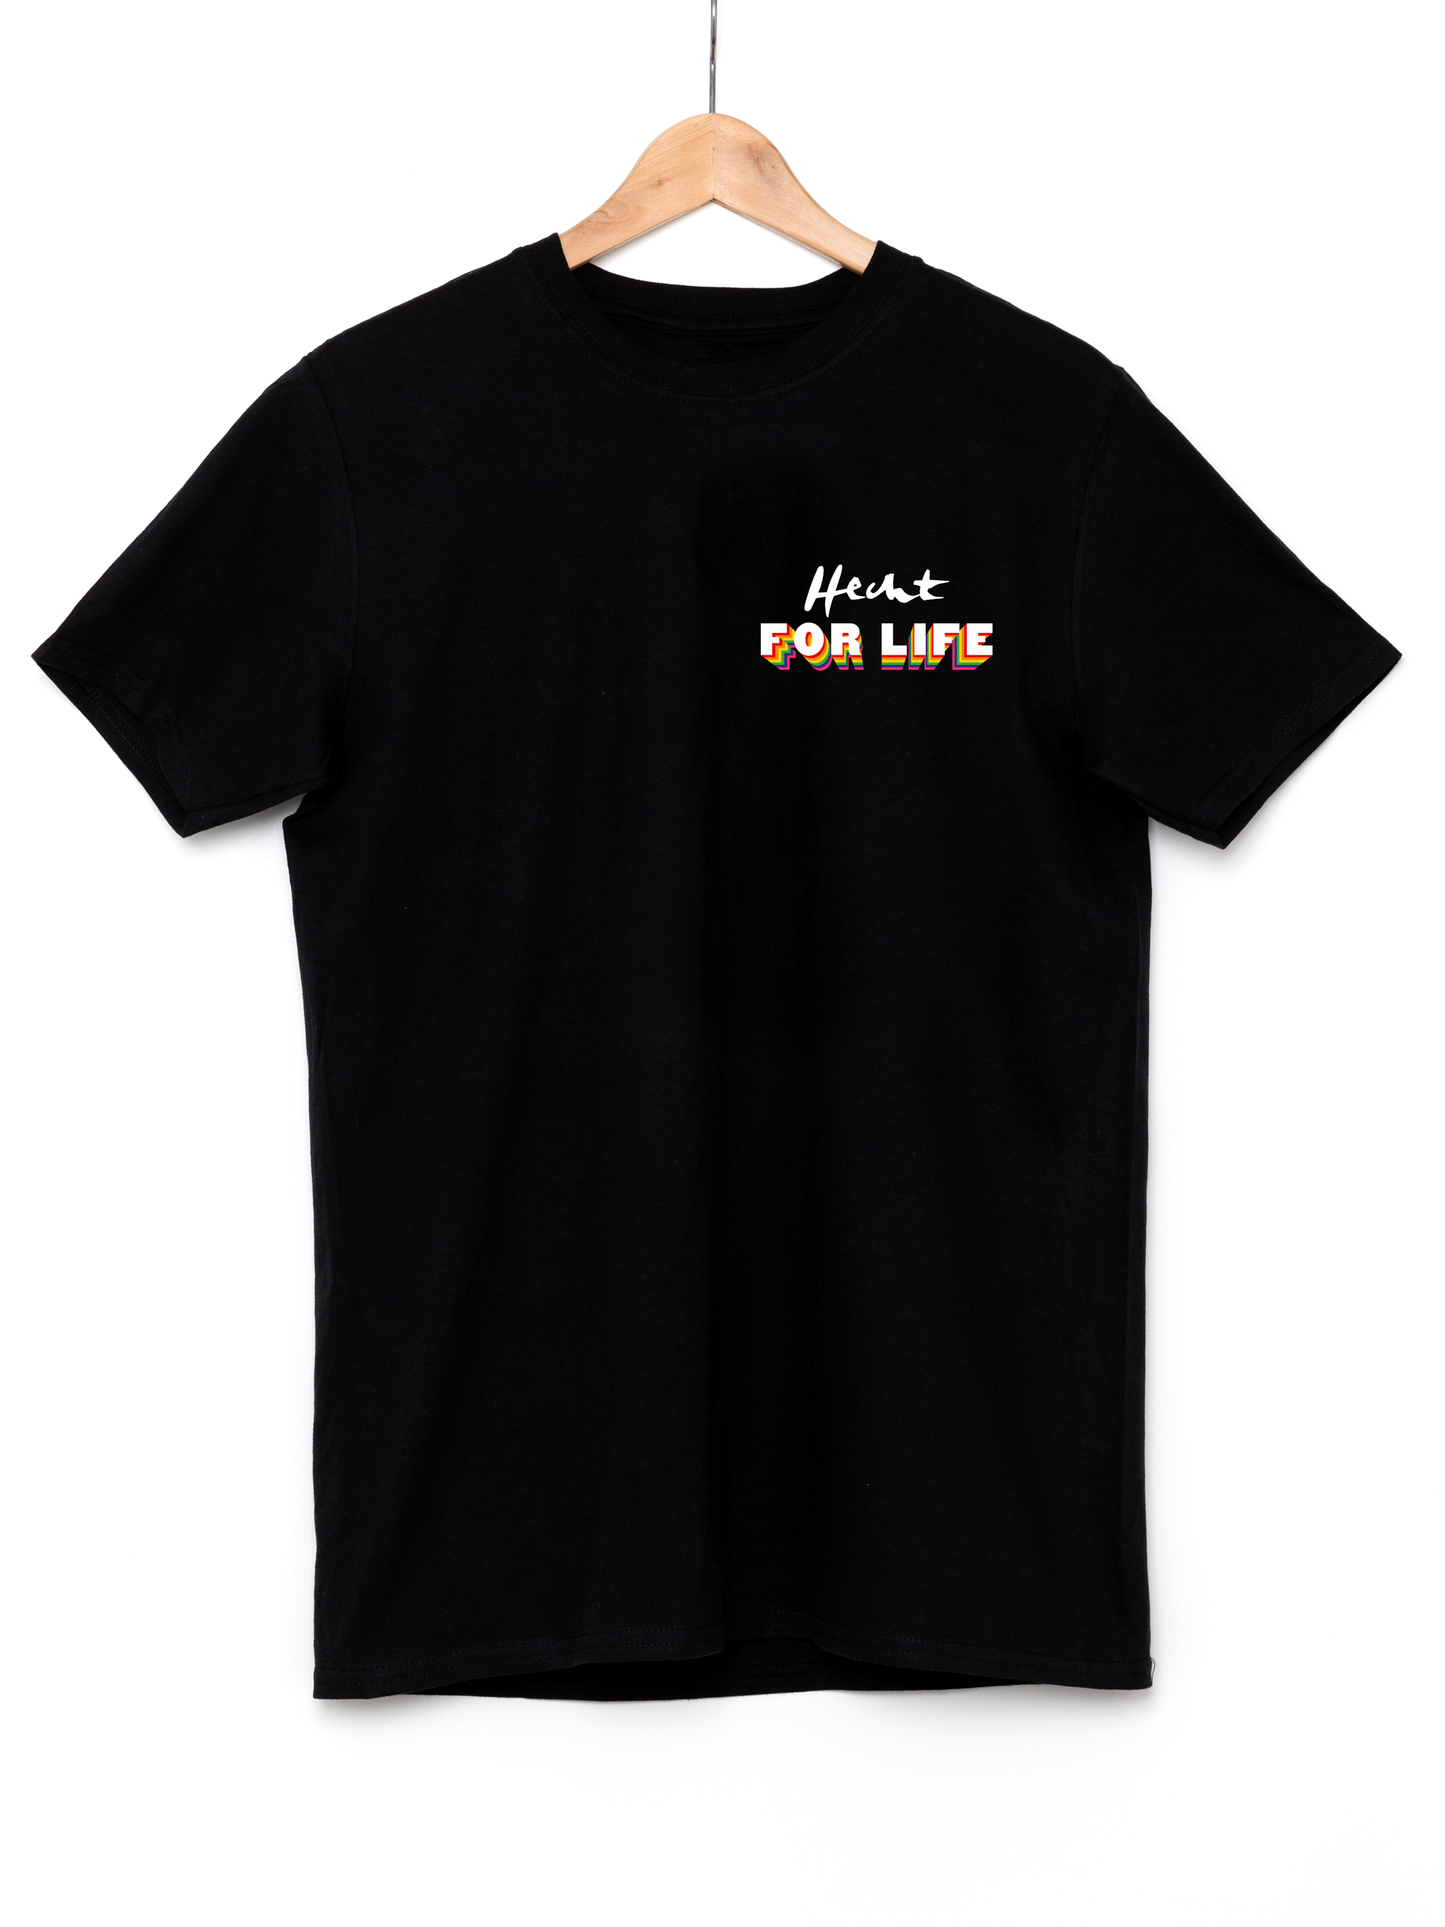 Hecht for Life - T-Shirt